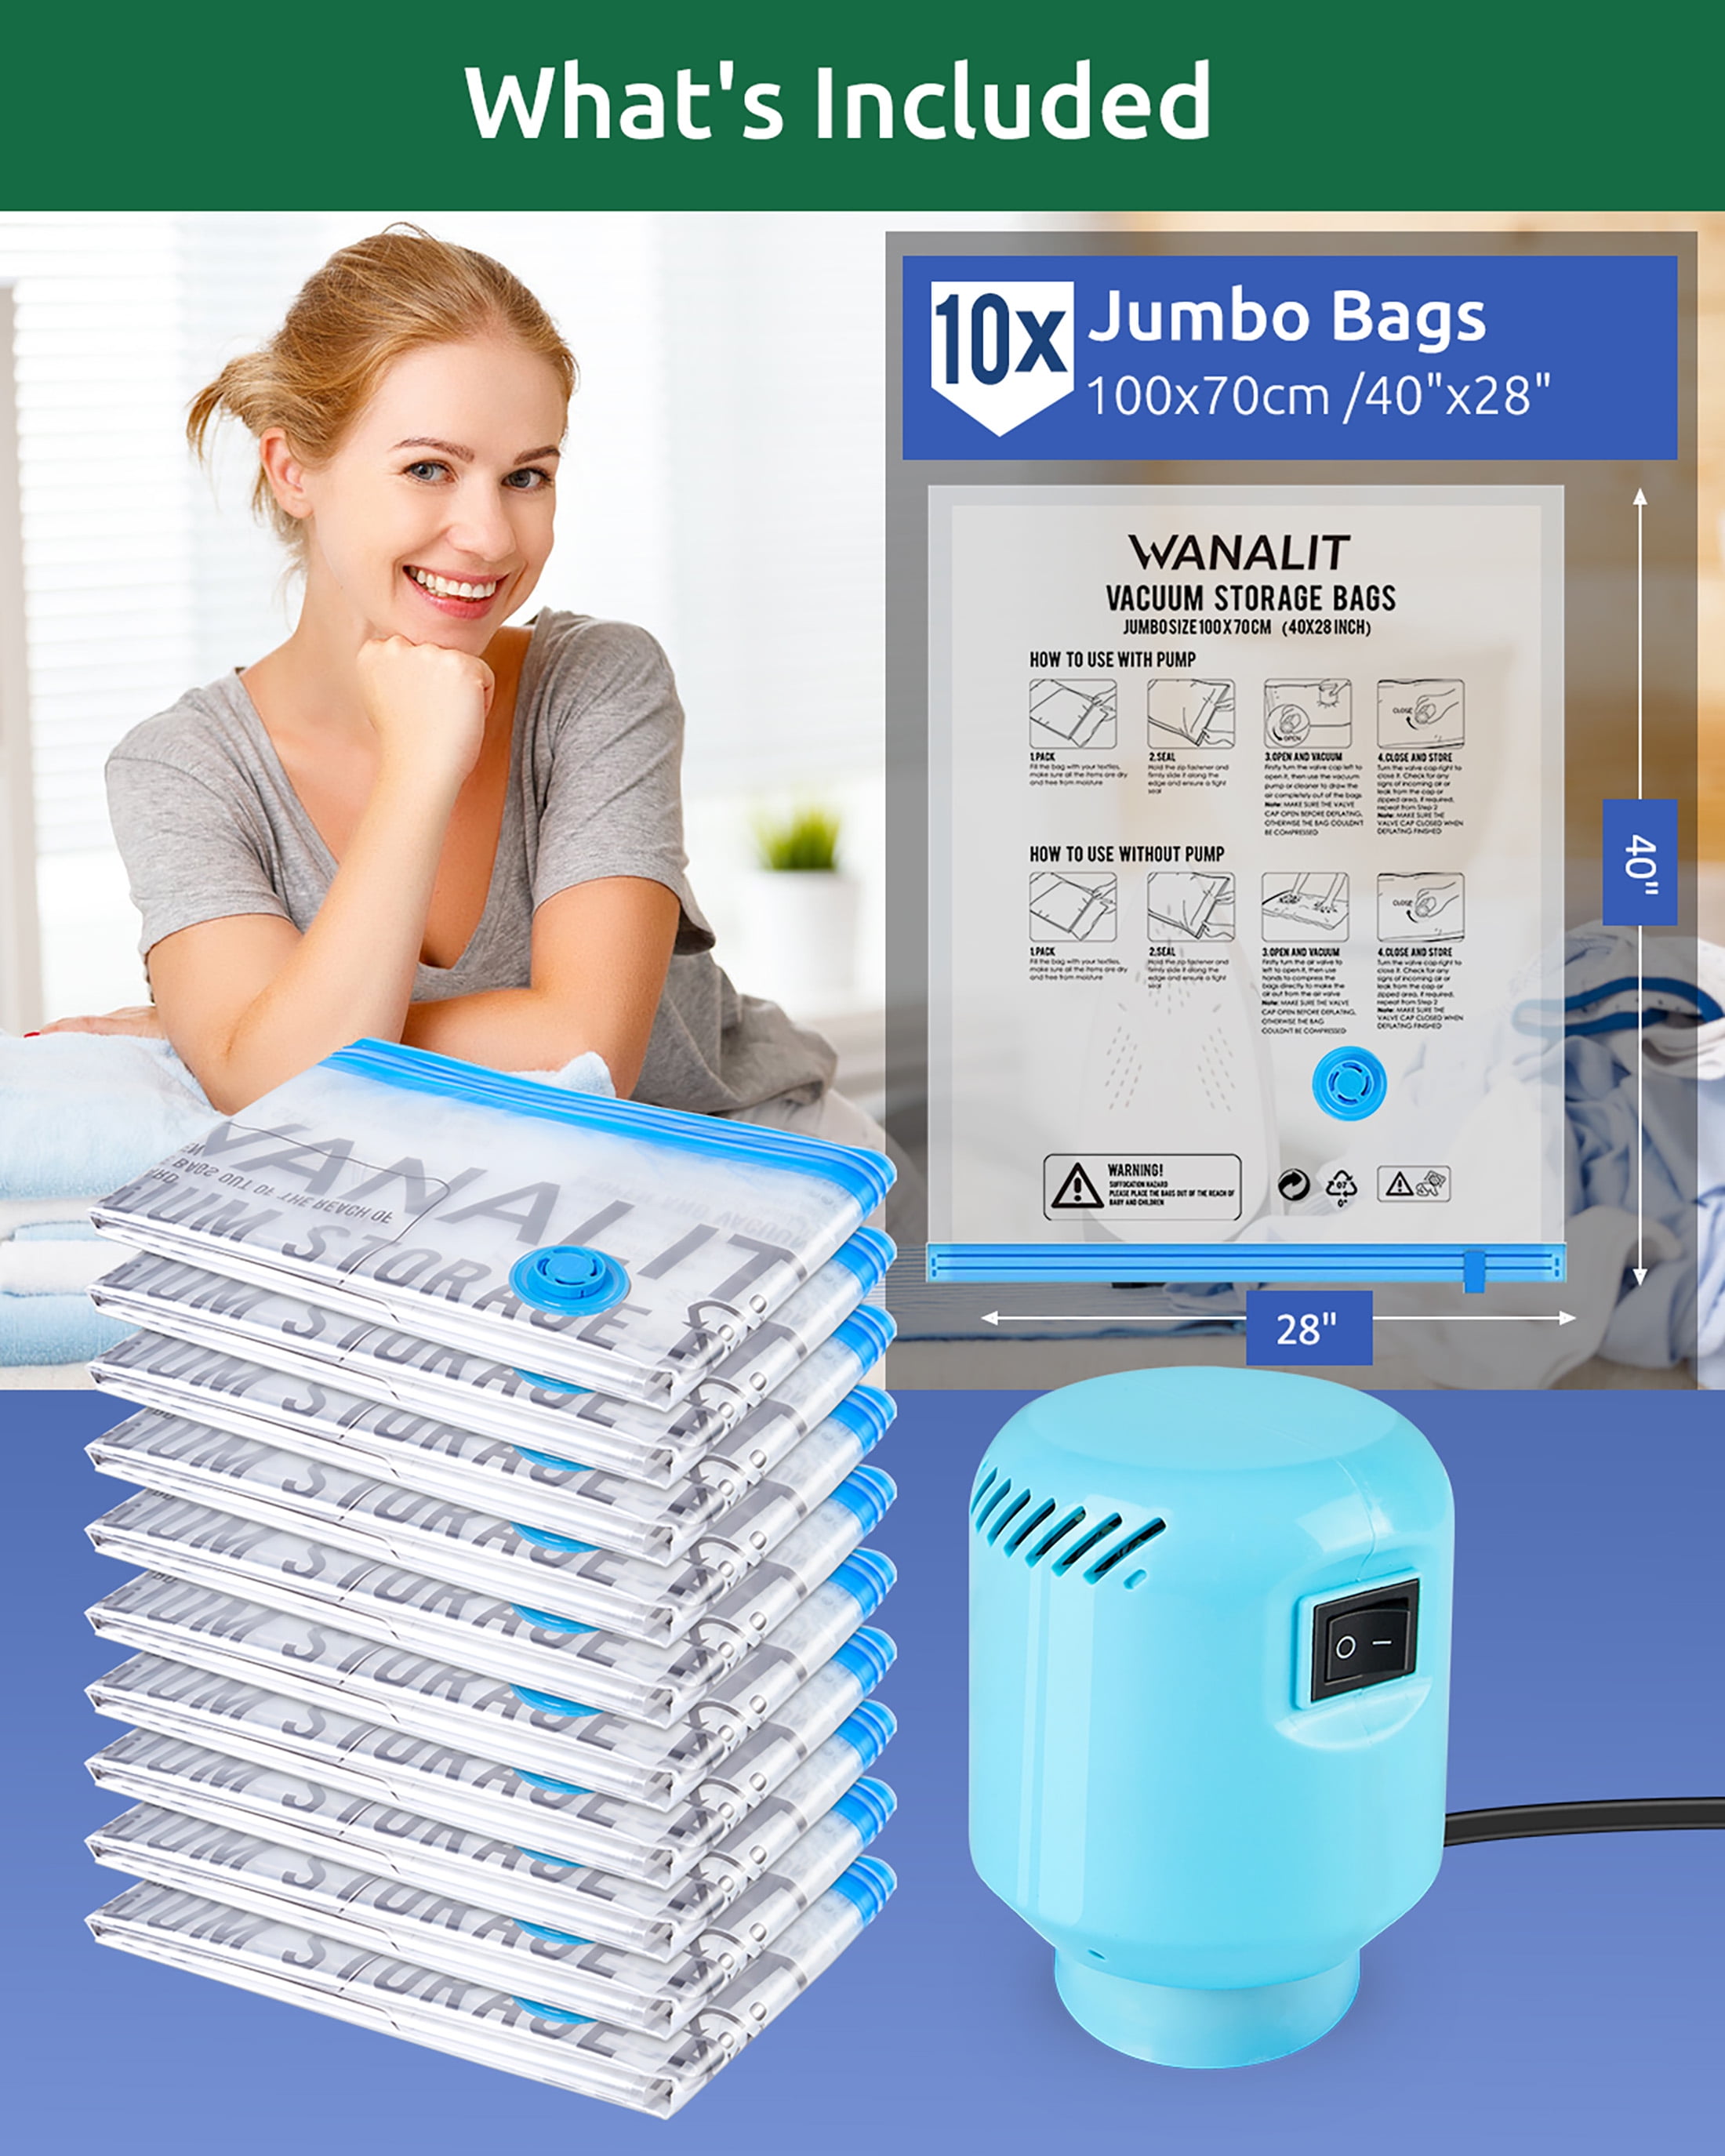 WANALIT Vacuum Storage Bags,15 Combo Space Saver Vacuum Storage